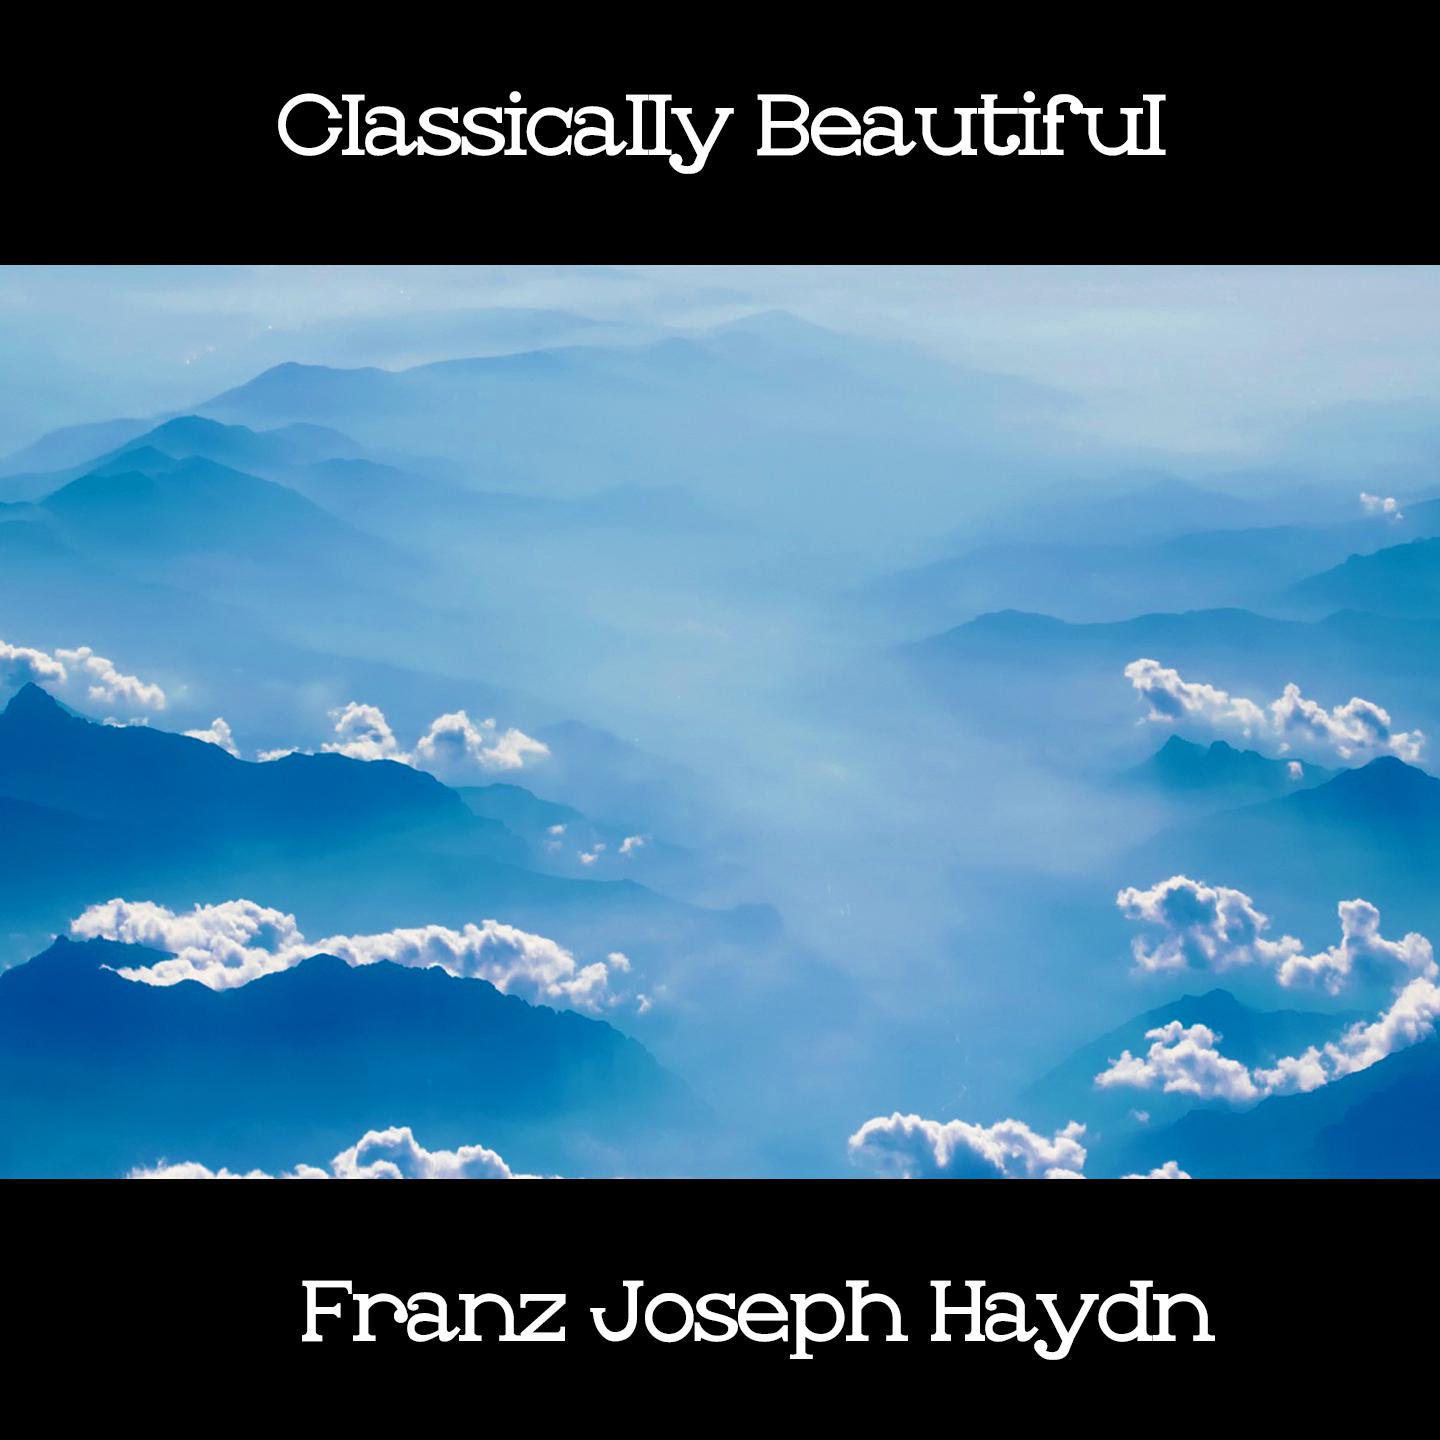 Classically Beautiful Franz Joseph Haydn